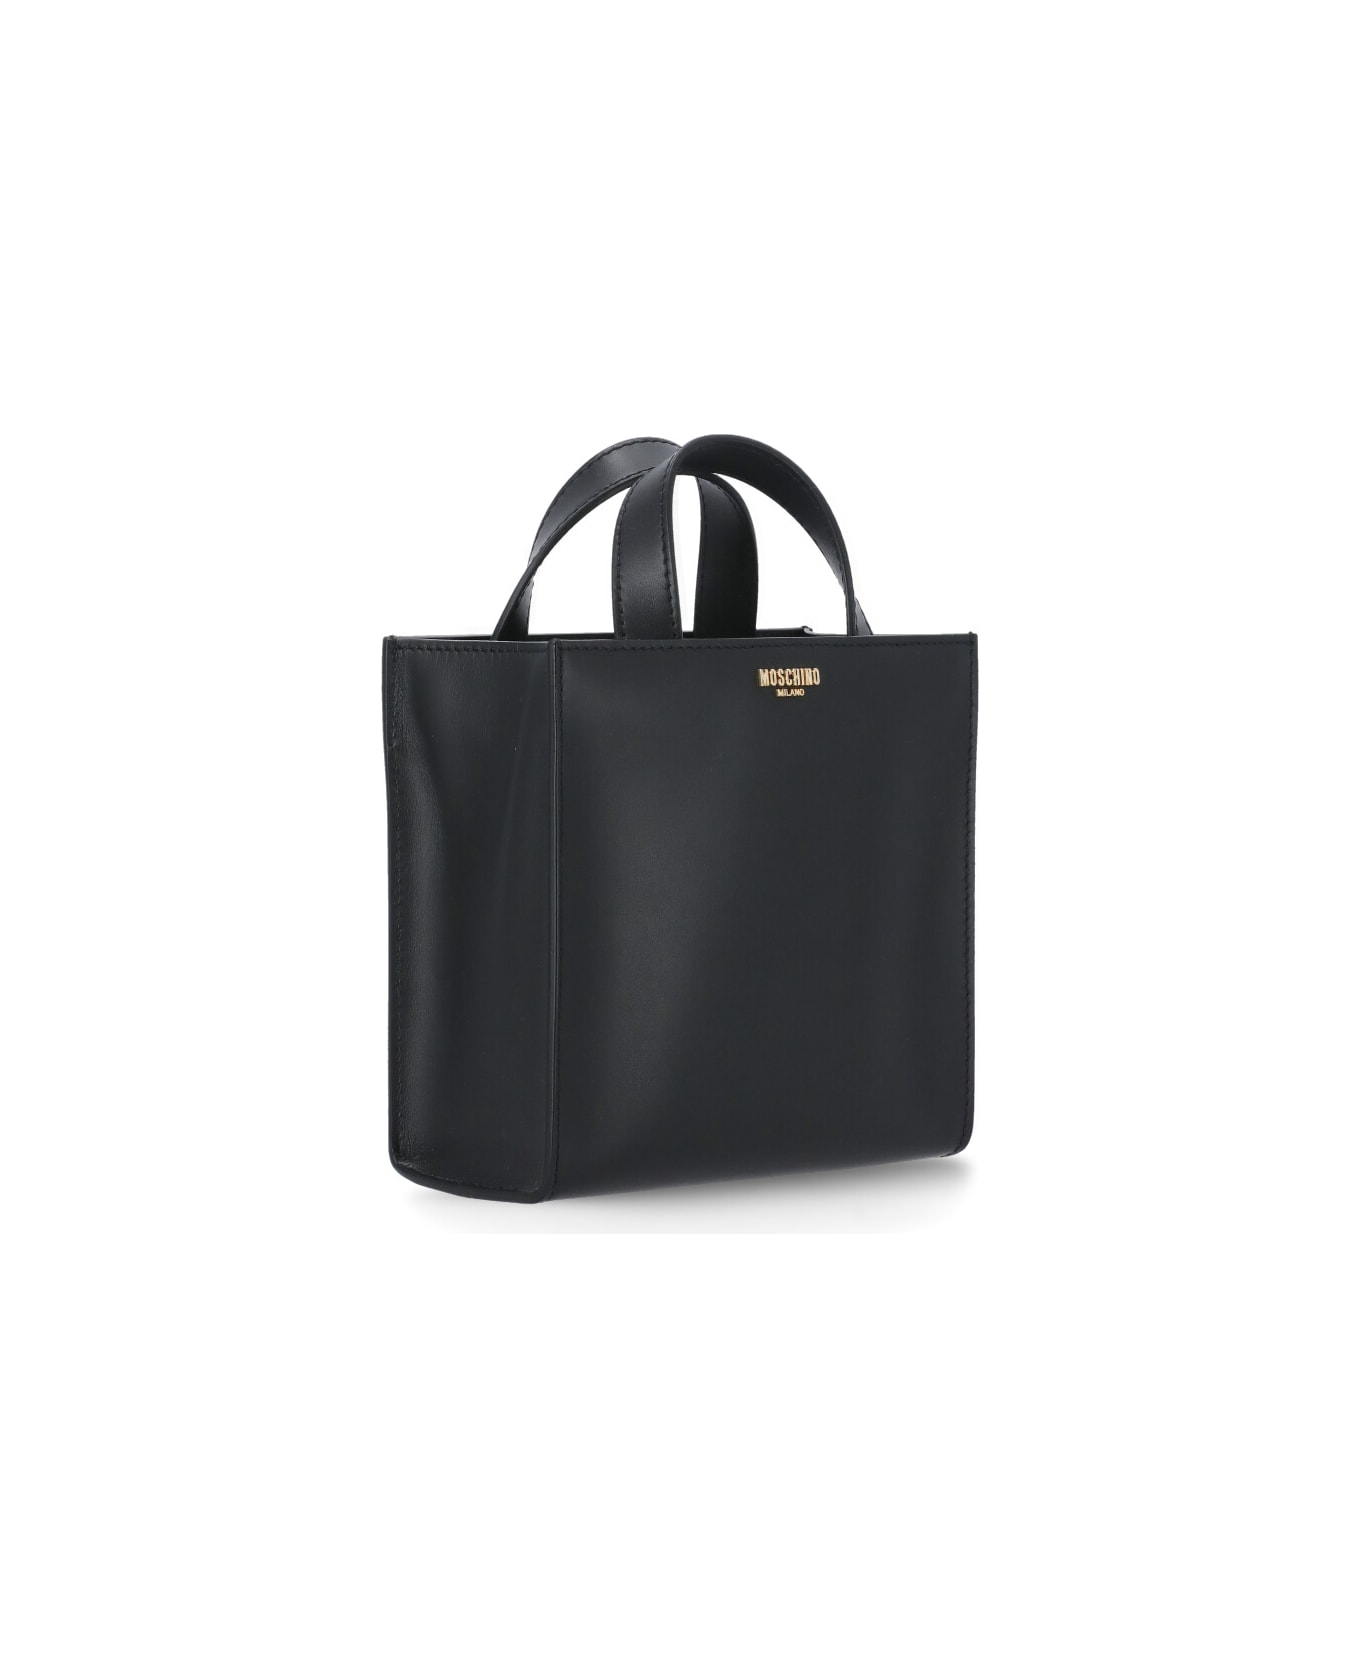 Moschino Leather Shoulder Bag - Black ショルダーバッグ